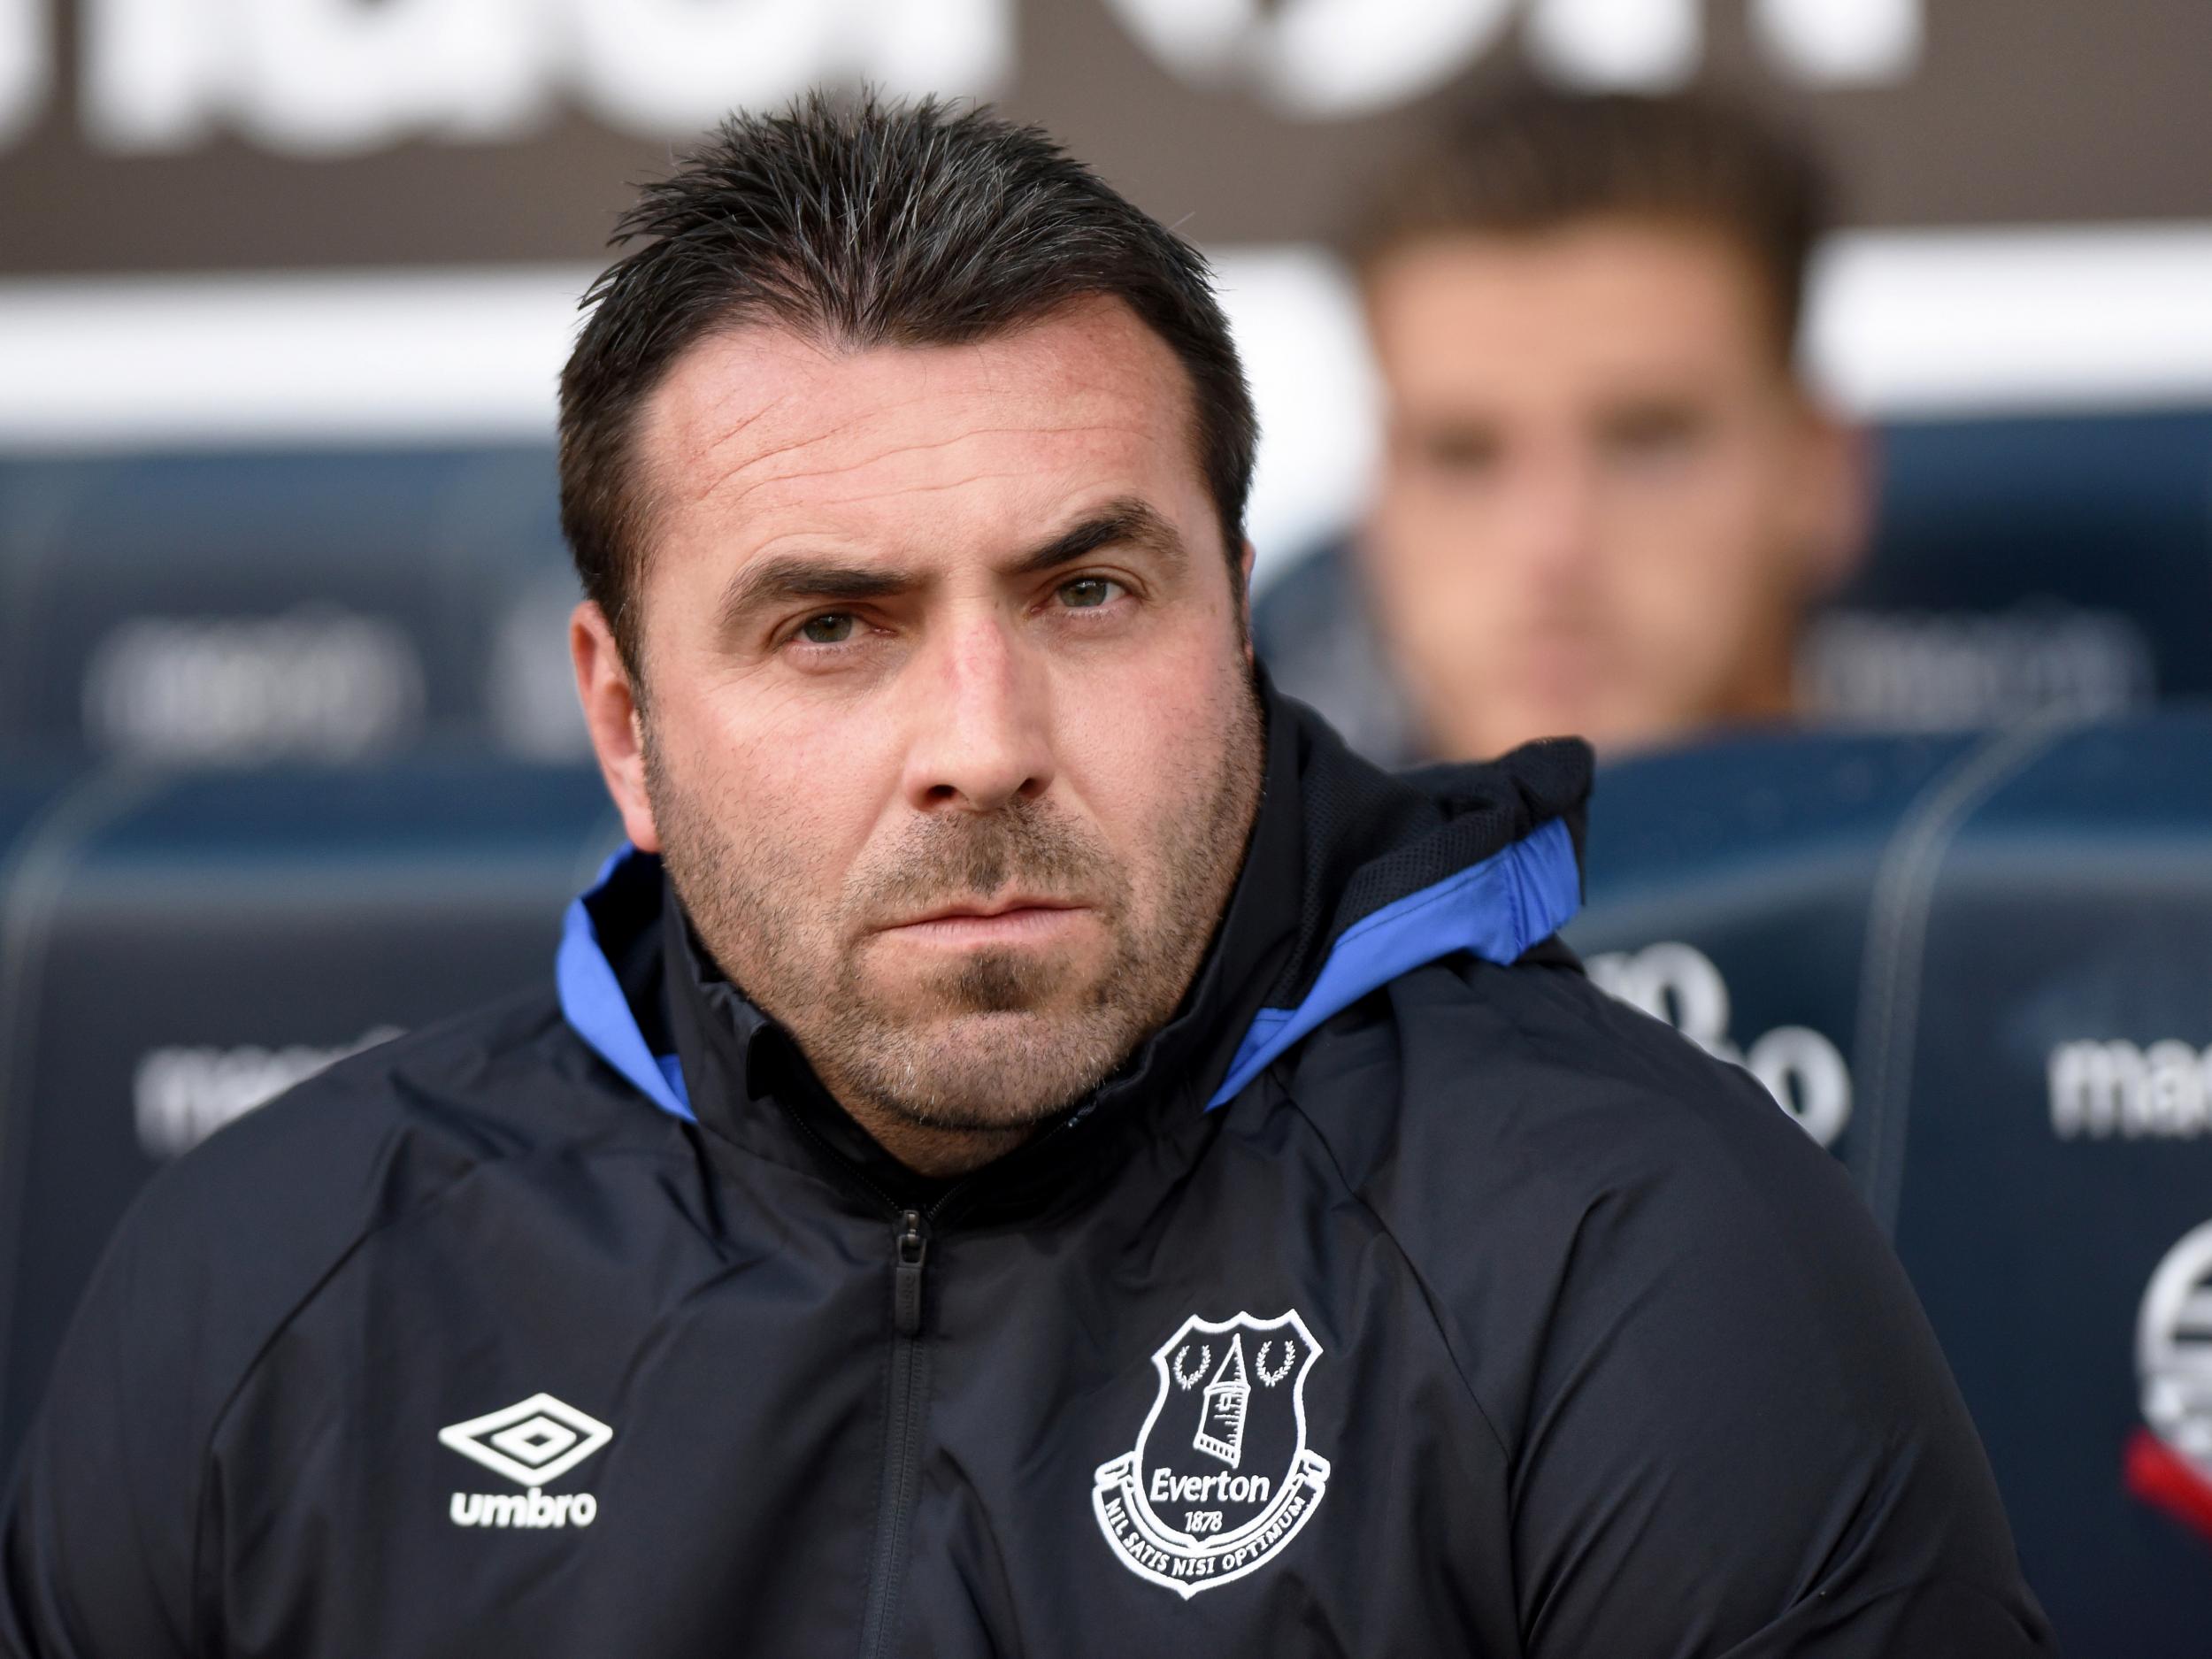 Unsworth is in caretaker charge of Everton following Koeman's sacking